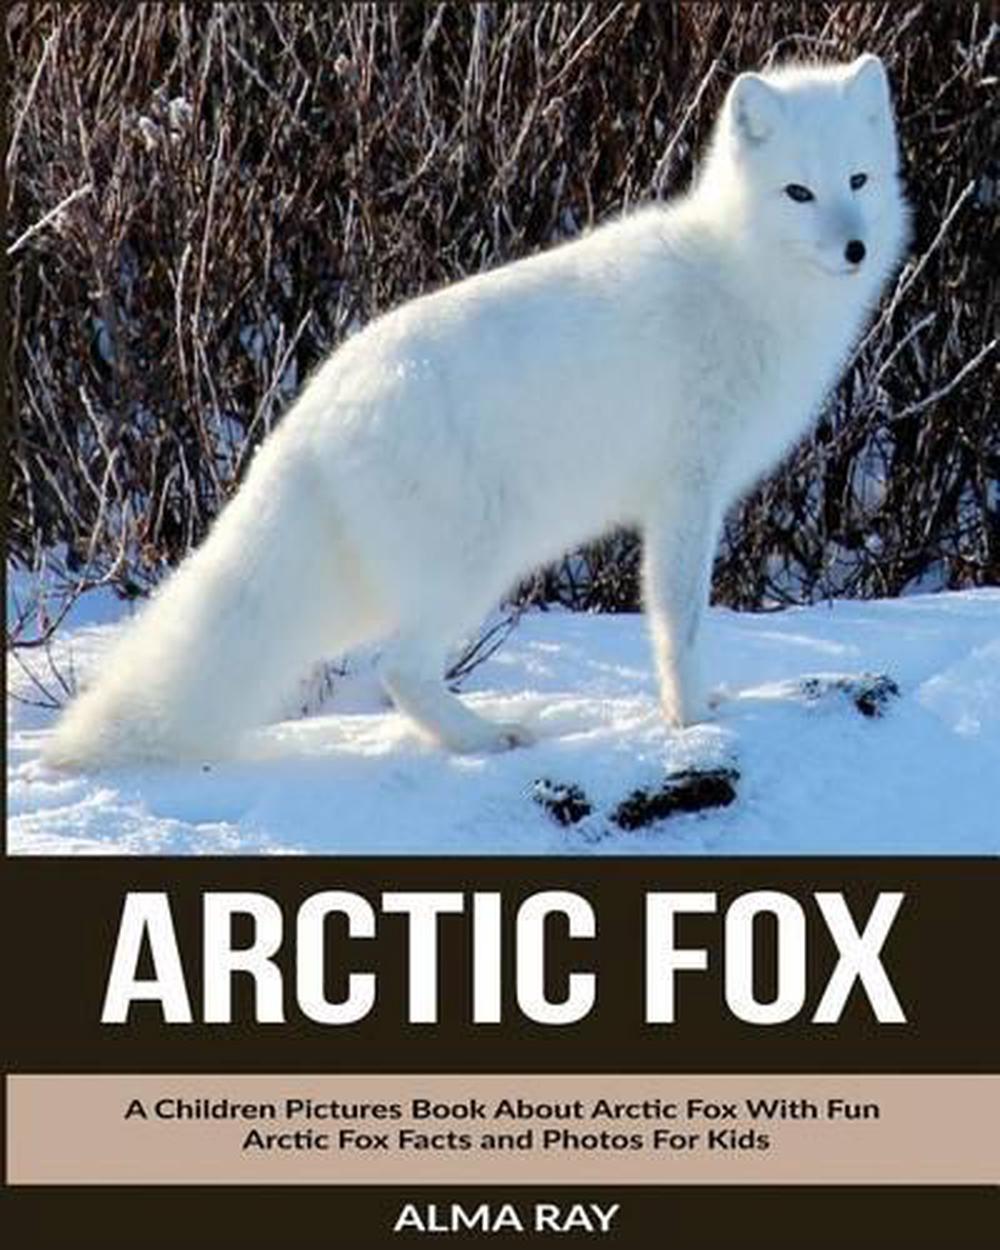 Arctic Fox for Kids